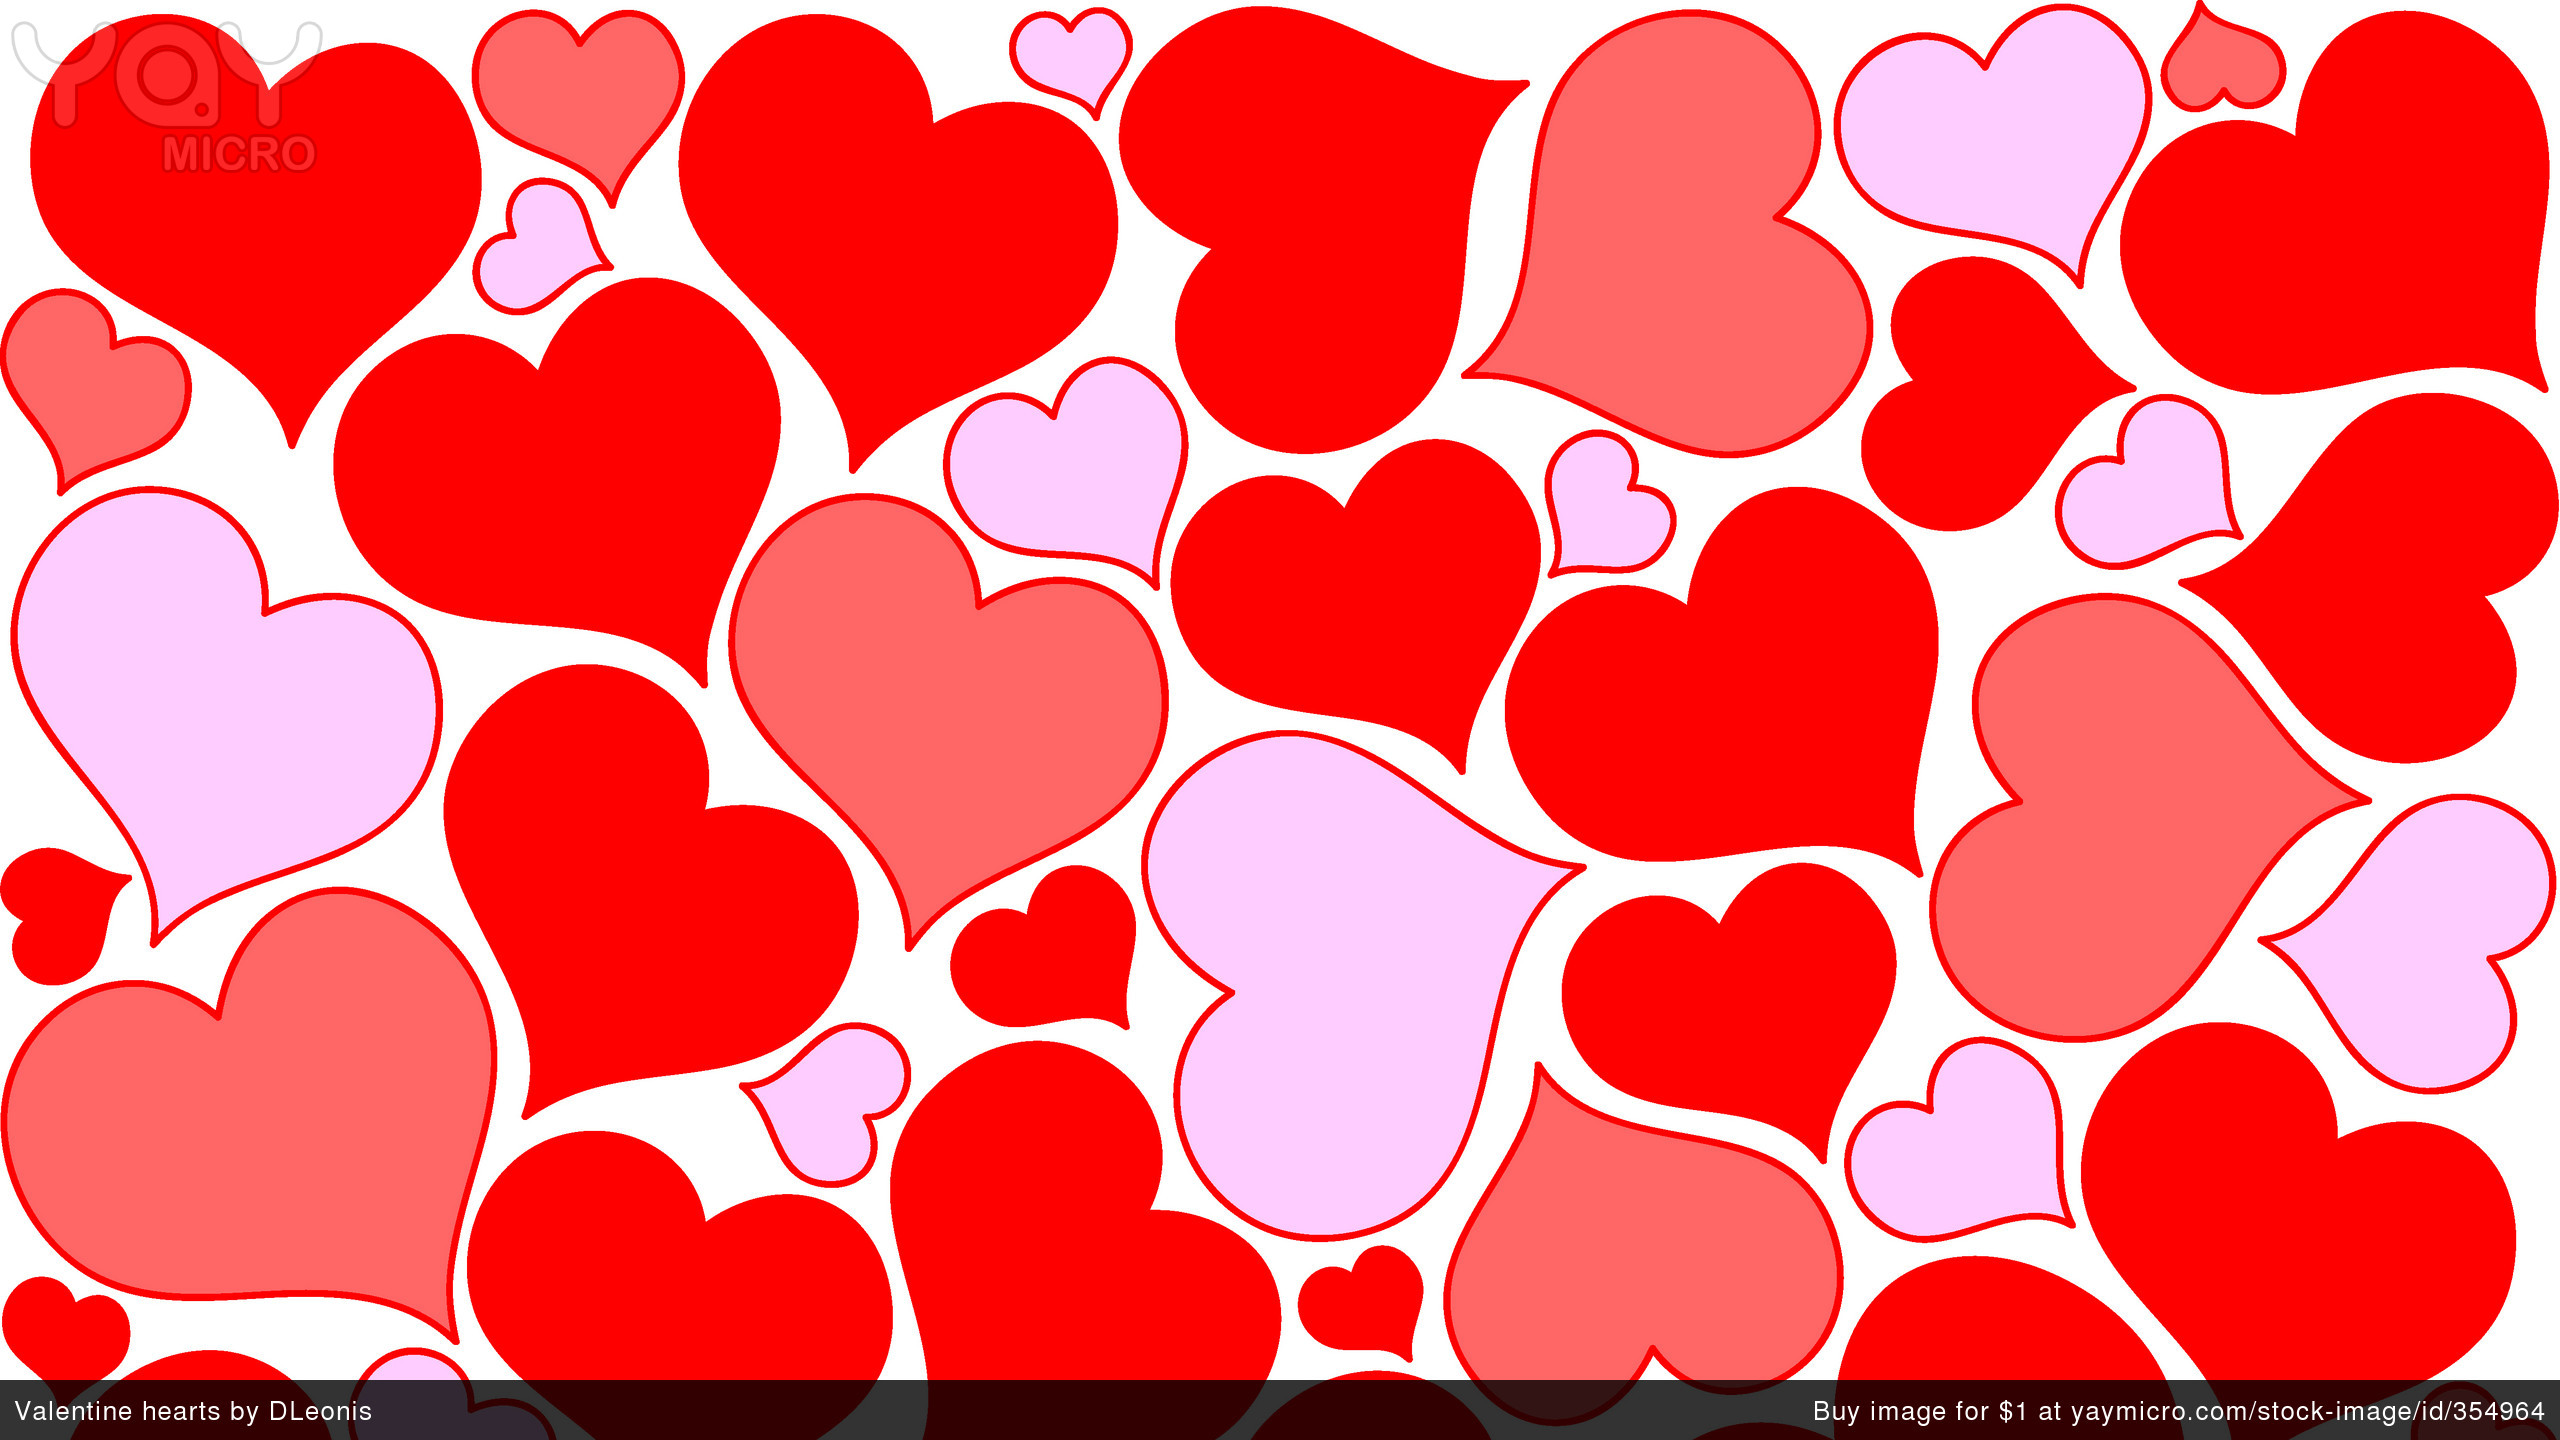 Wallpaper For Desktop Valentine Hearts Heart